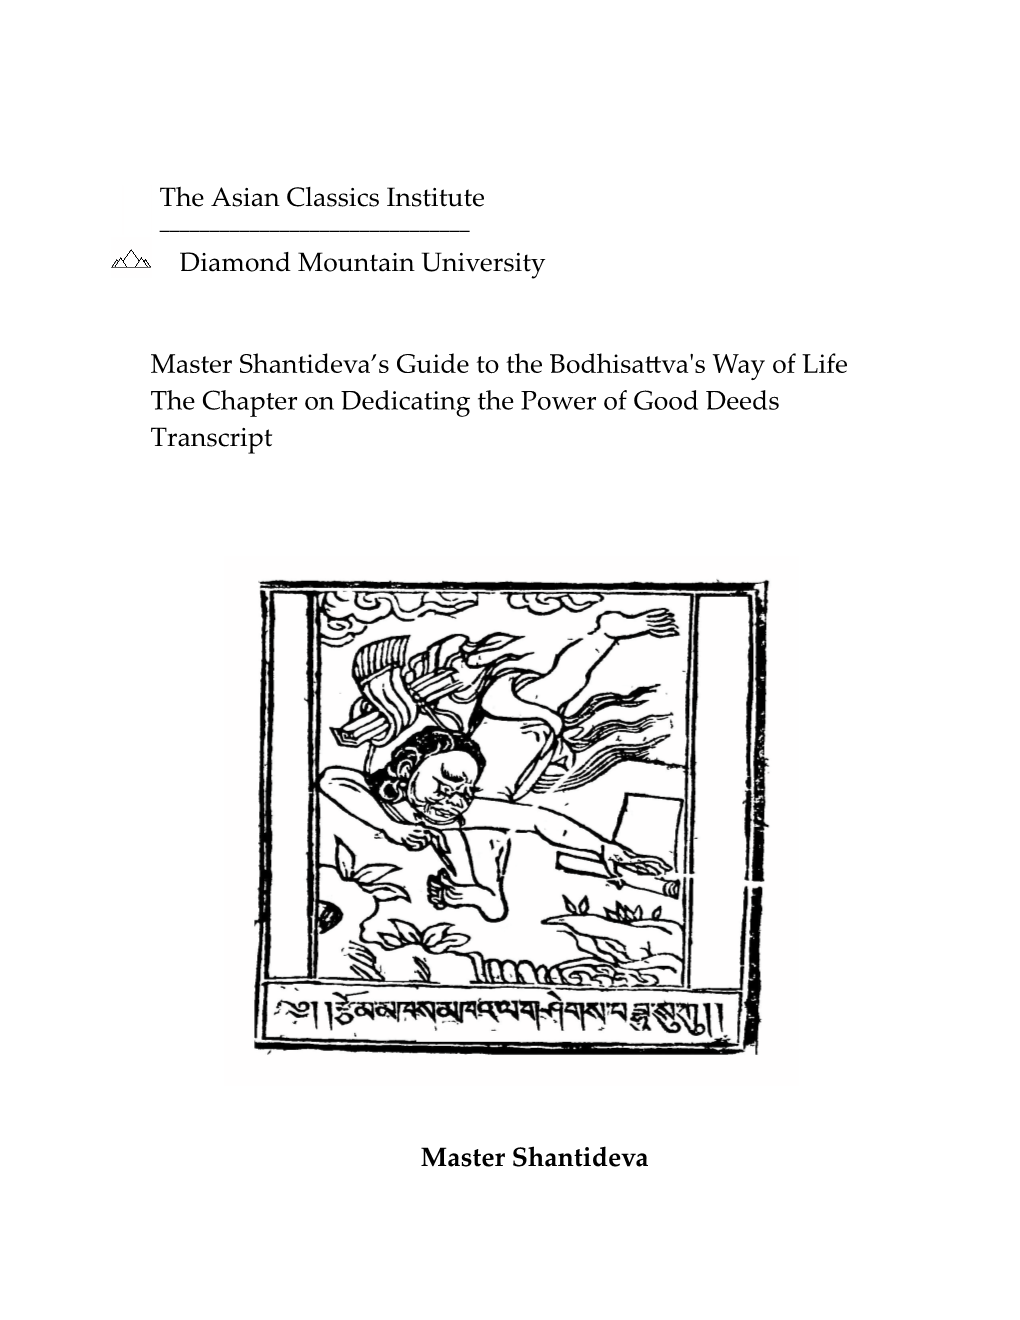 Master Shantideva's Guide to the Bodhisattva's Way of Life, The